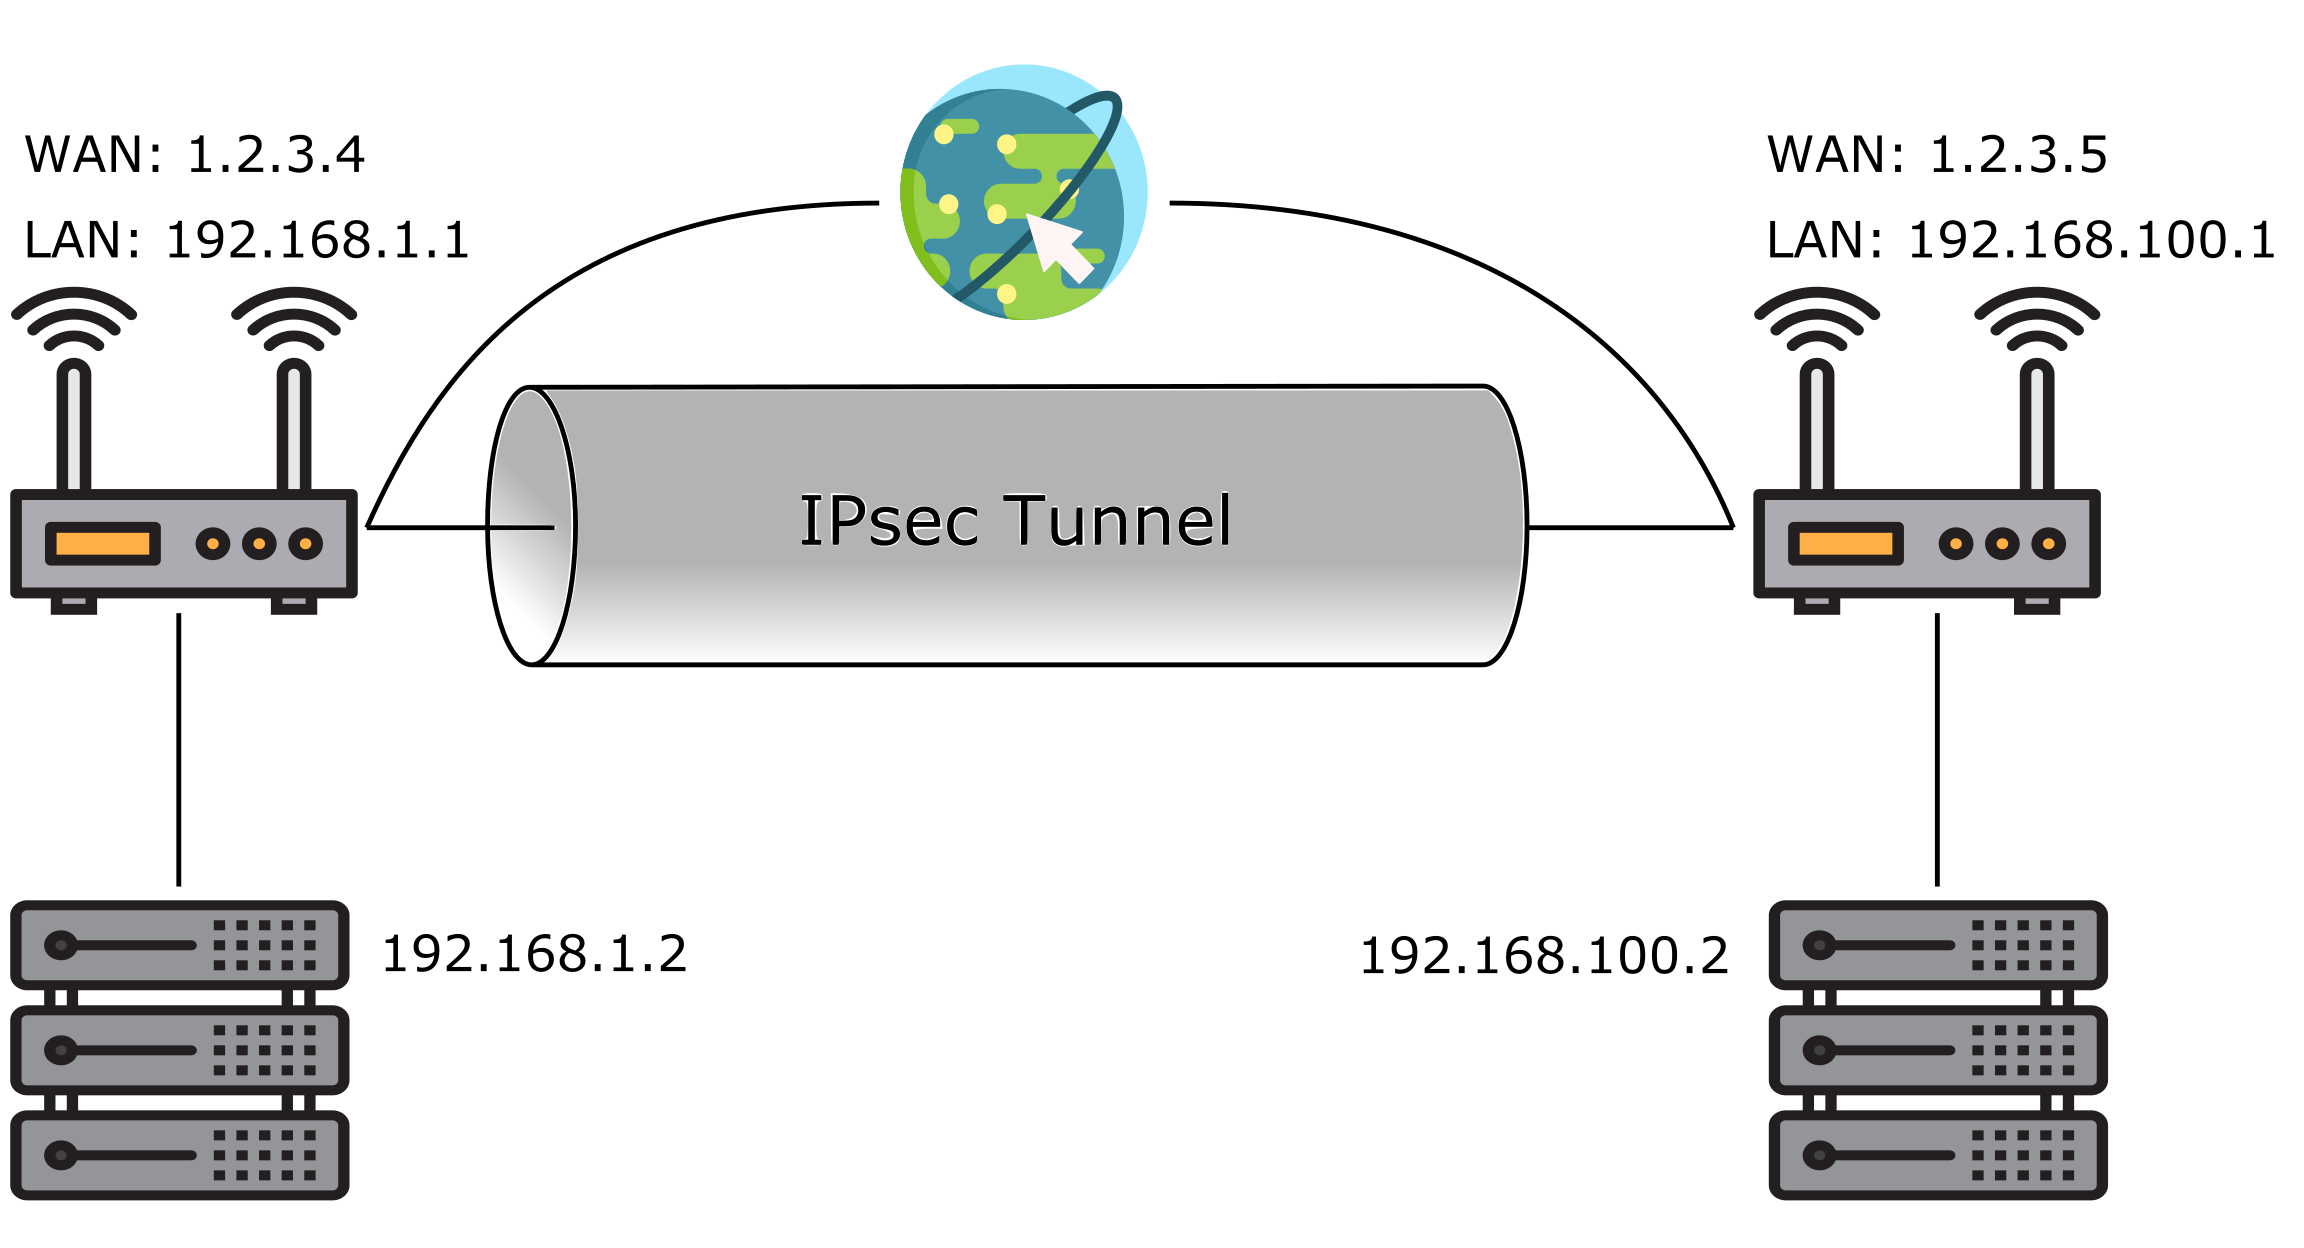 IPsec Tunnel